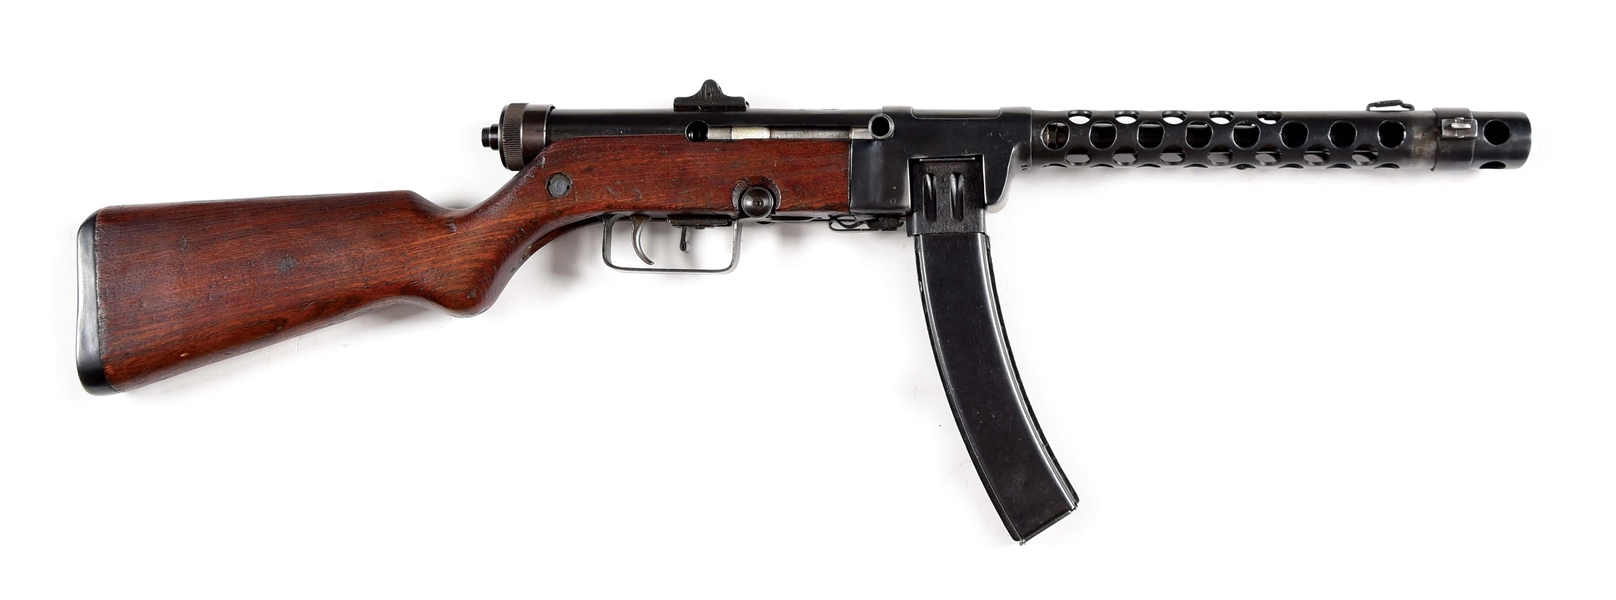 (N) HIGH CONDITION, INTERESTING AND RARE YUGOSLAVIAN MODEL 49/57 MACHINE GUN (PRE-86 DEALER SAMPLE).